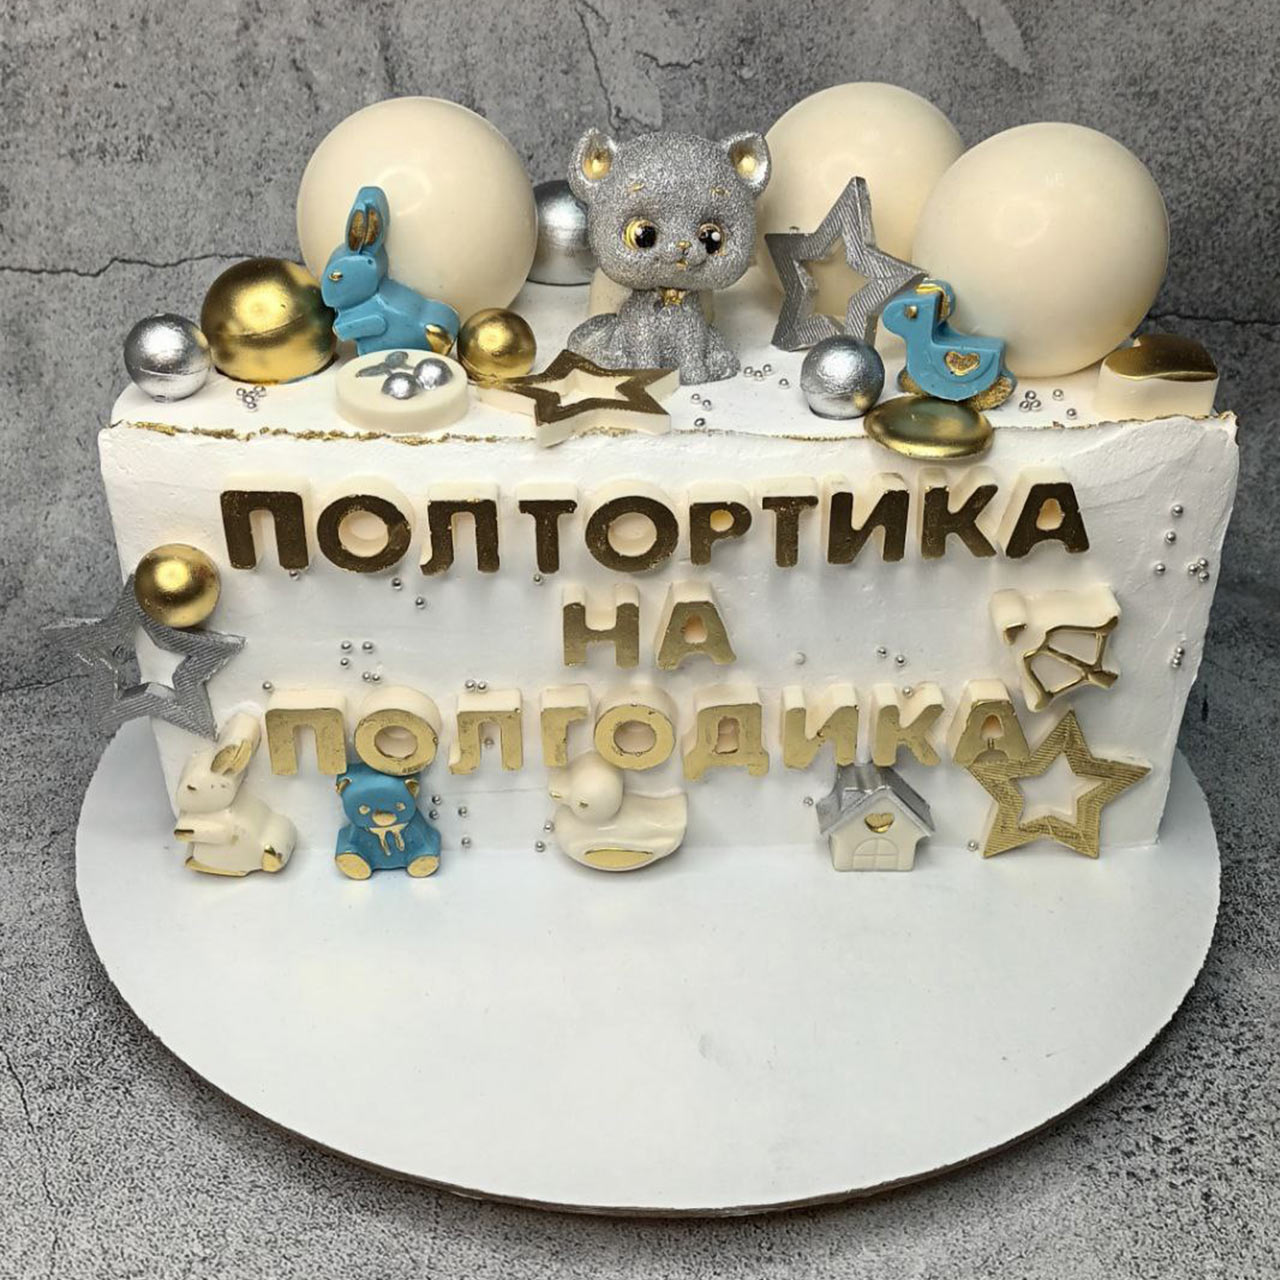 Детский торт «Полтортика» арт. 218